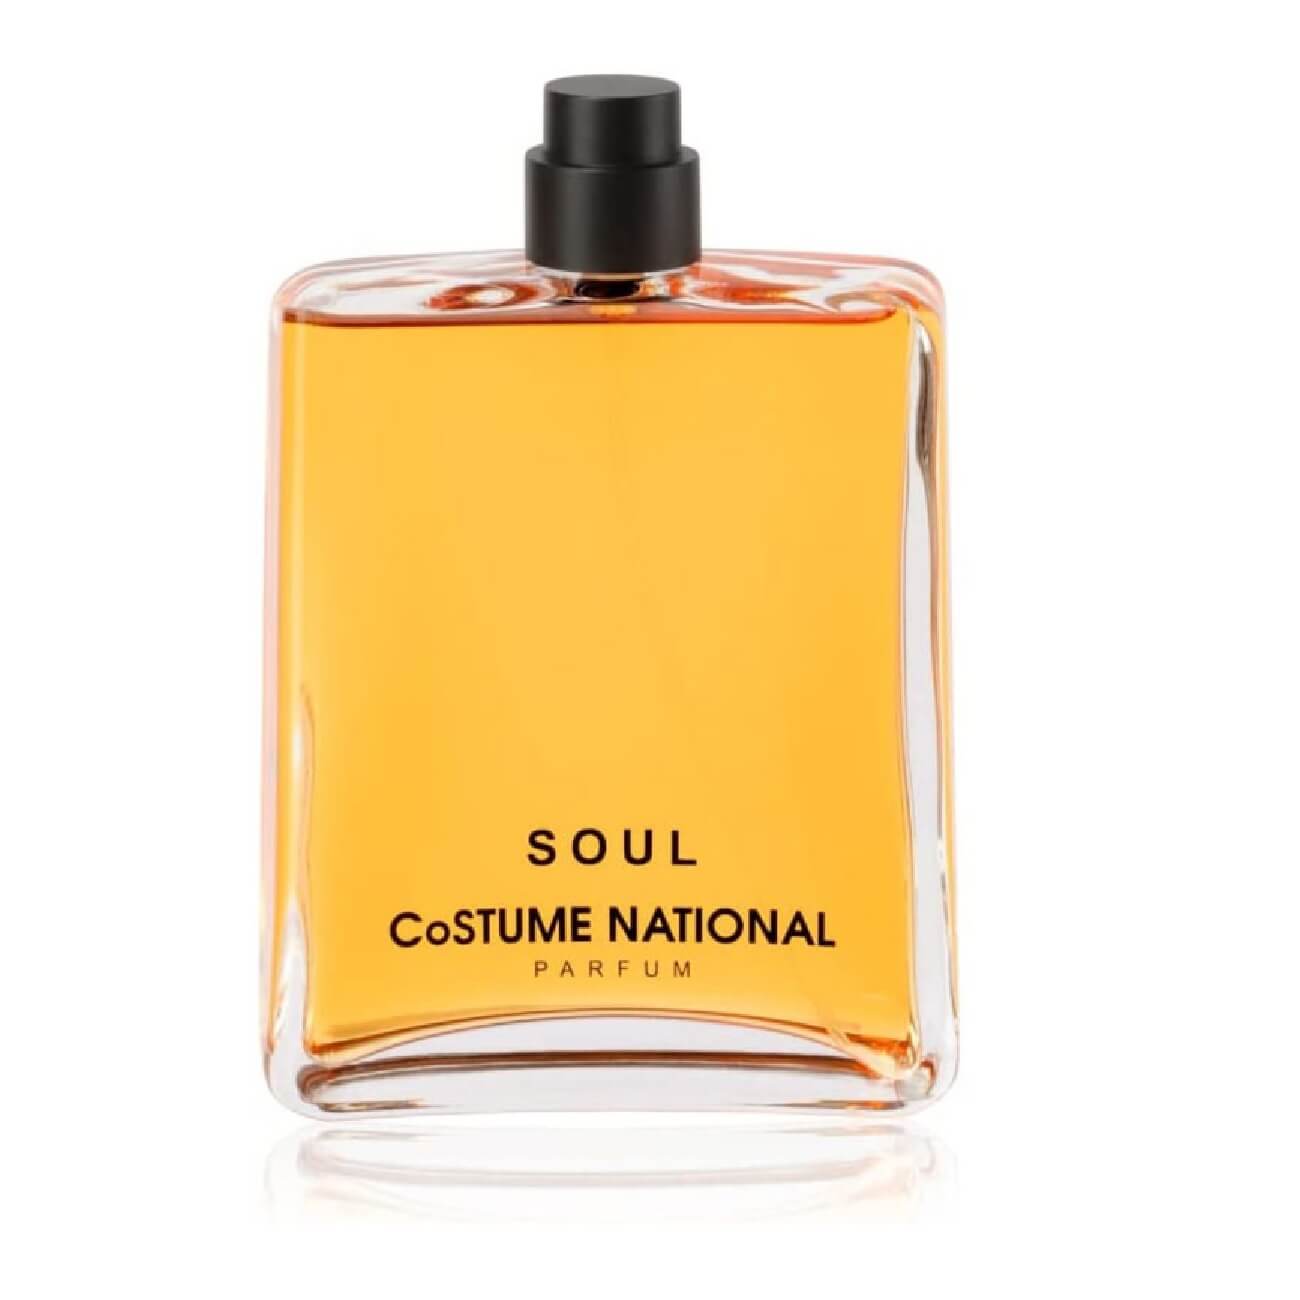 costume national soul parfum